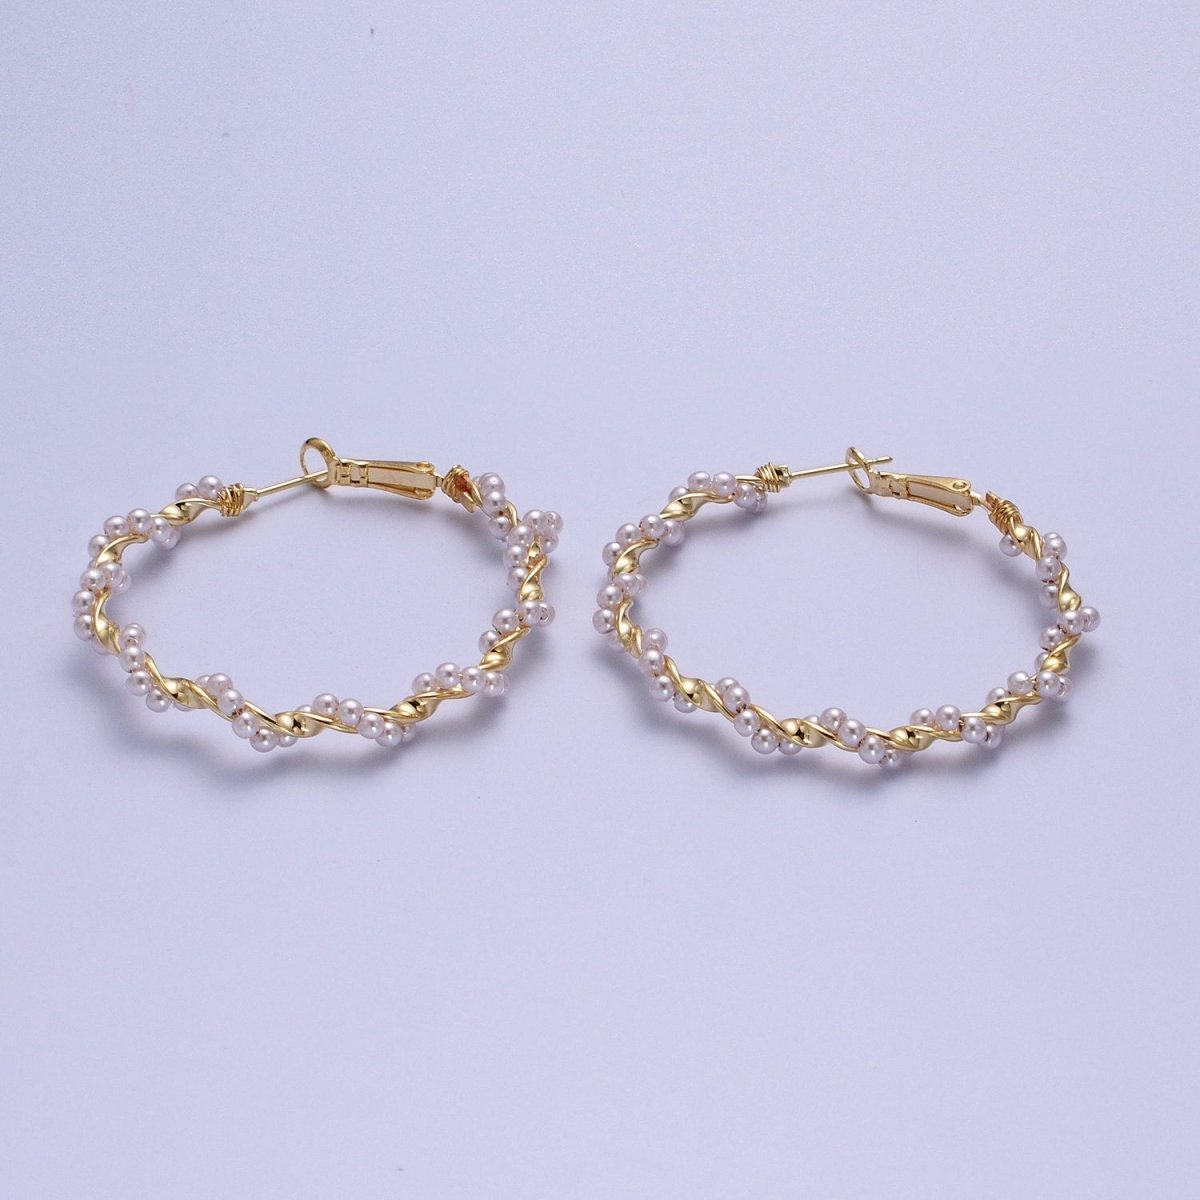 24K Gold Filled Twisted Pearls 50mm Hoops Earrings | Y-231 - DLUXCA